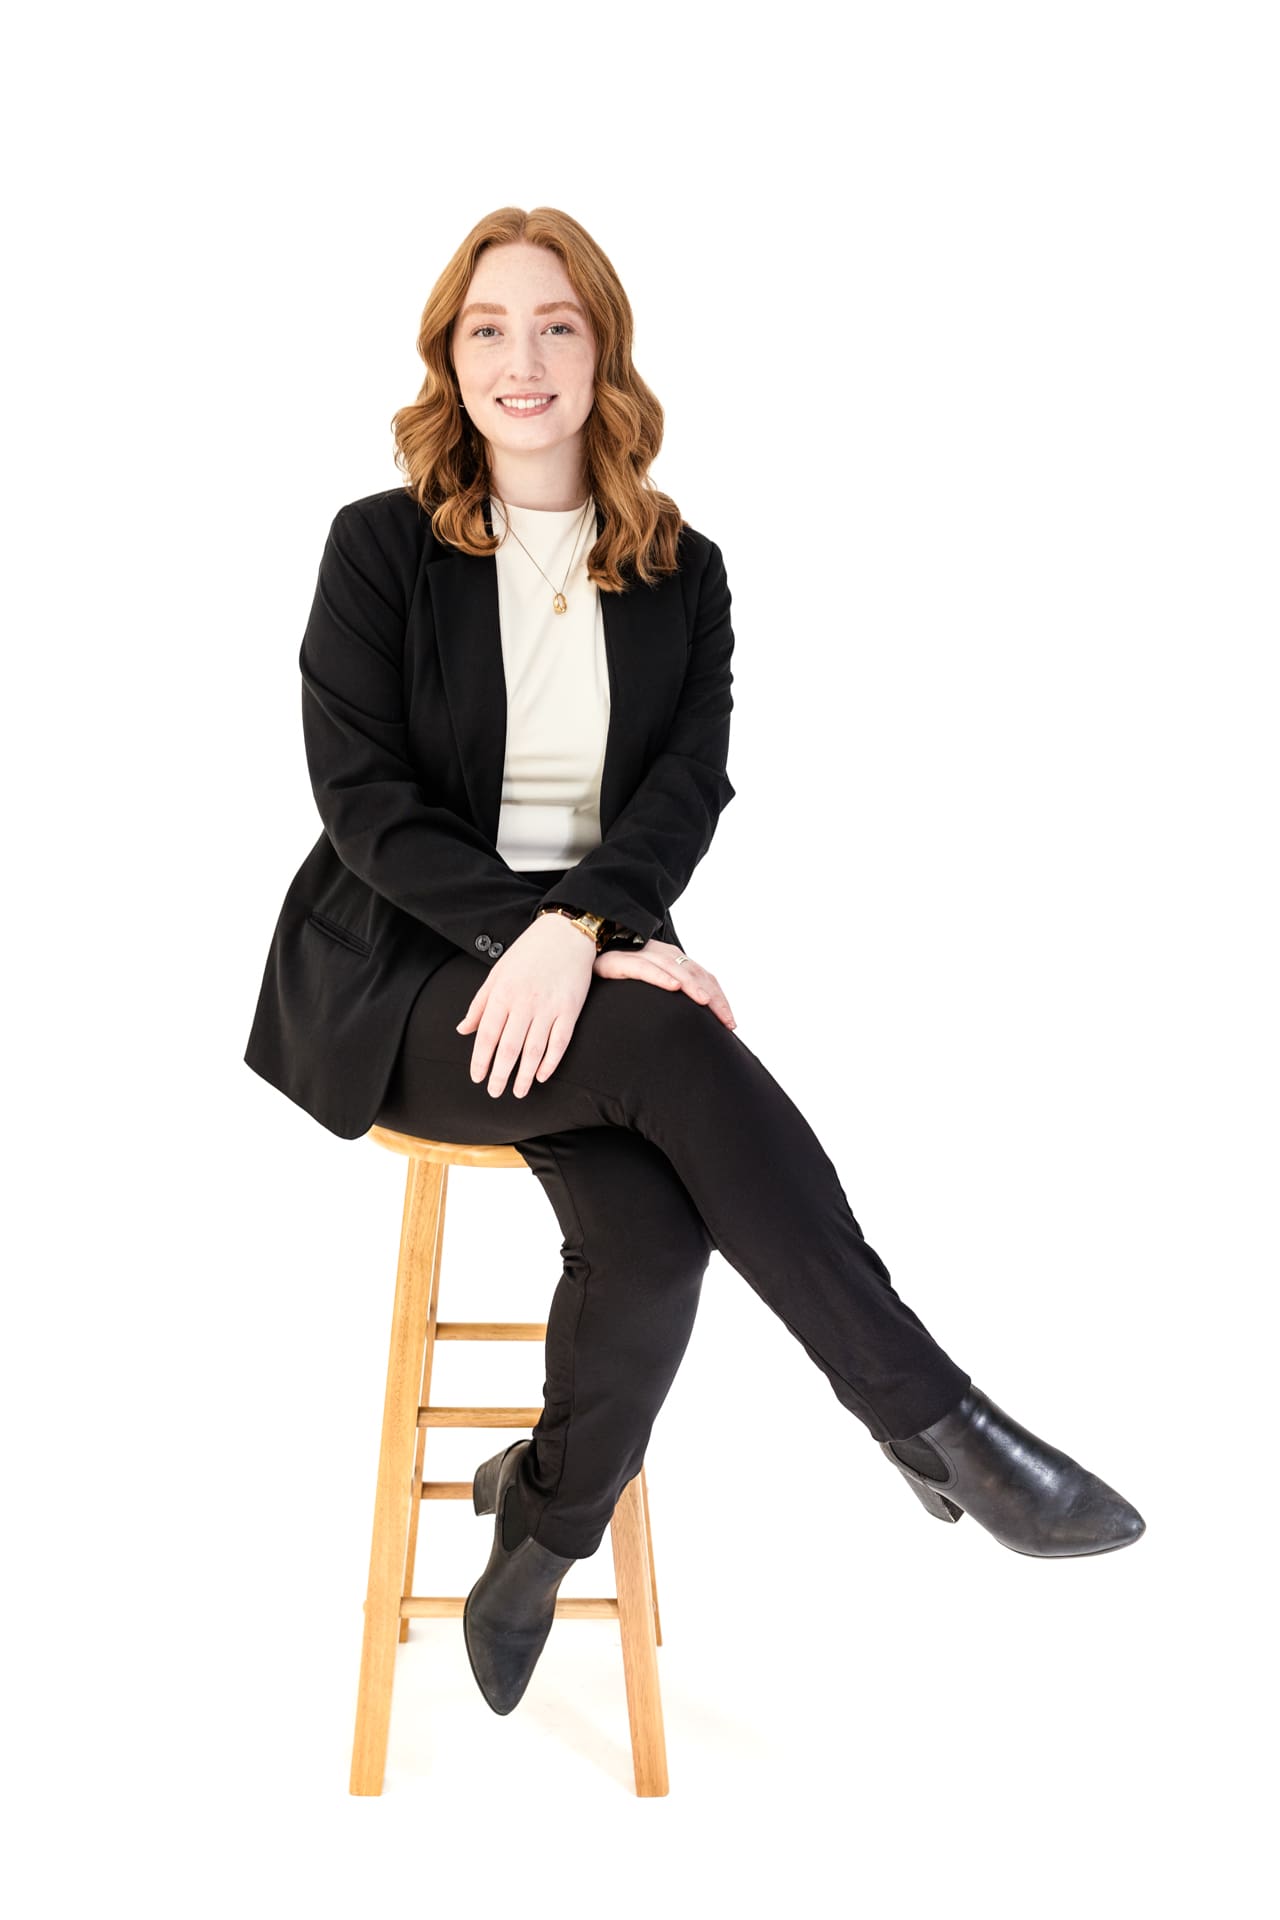 Studio portrait of woman wearing black suit sitting on stool at Chicago photography studio P&M Studio